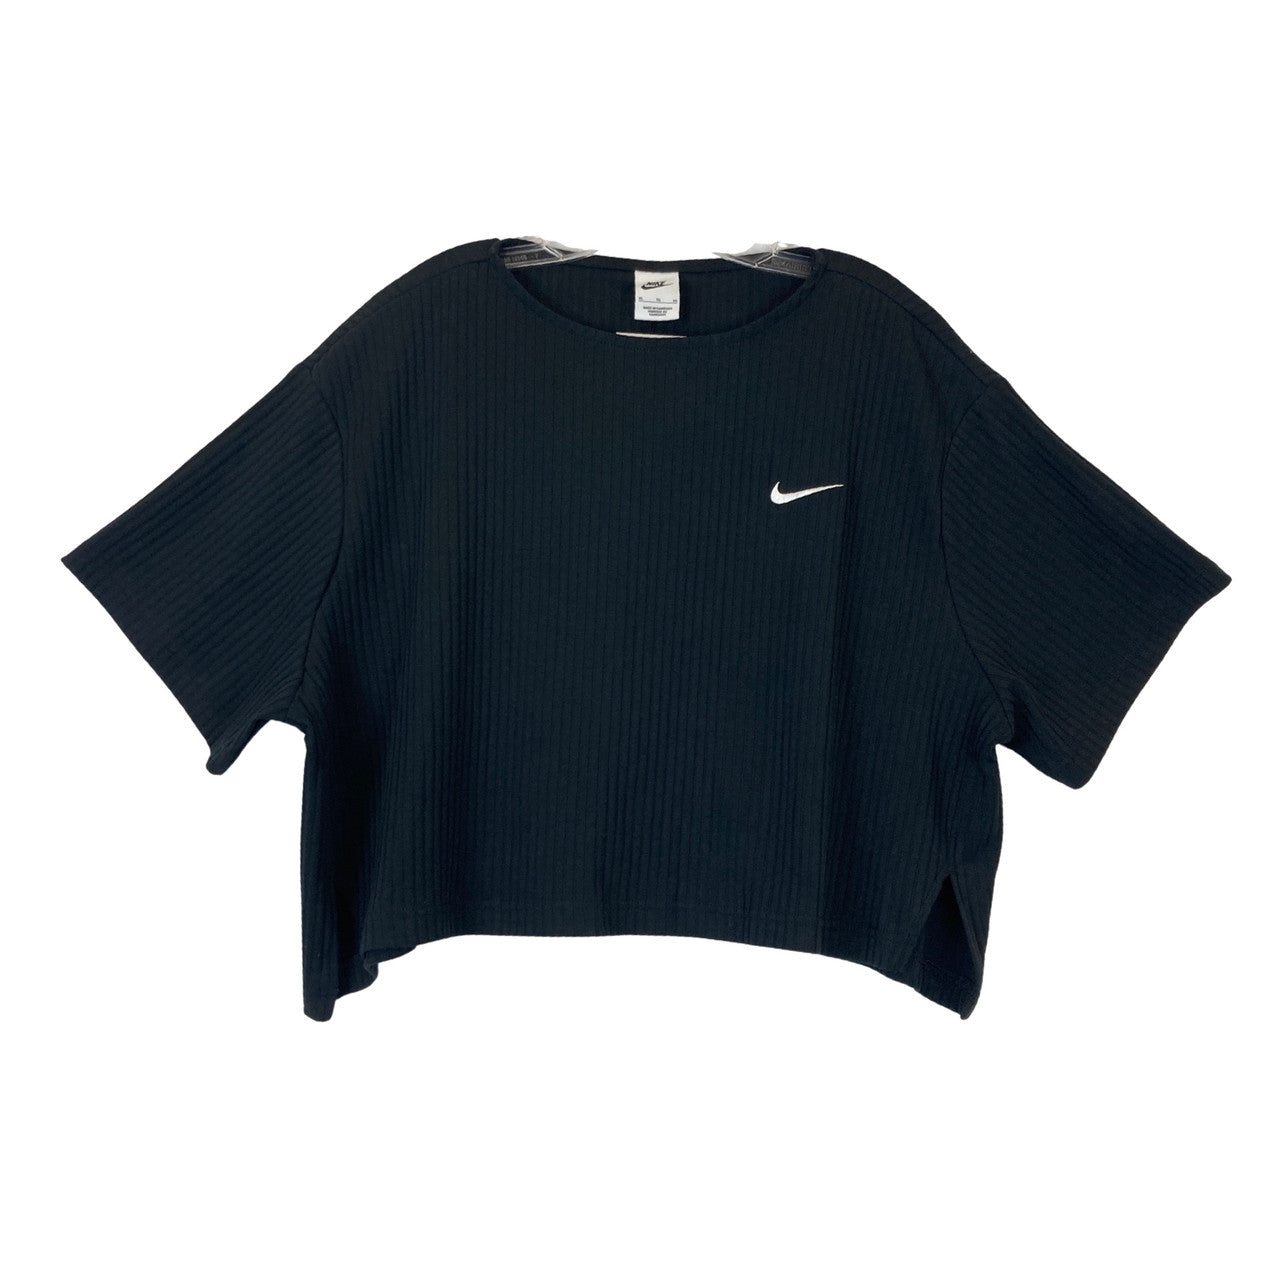 Nike Oversized Cropped Ribbed T Shirt-black front